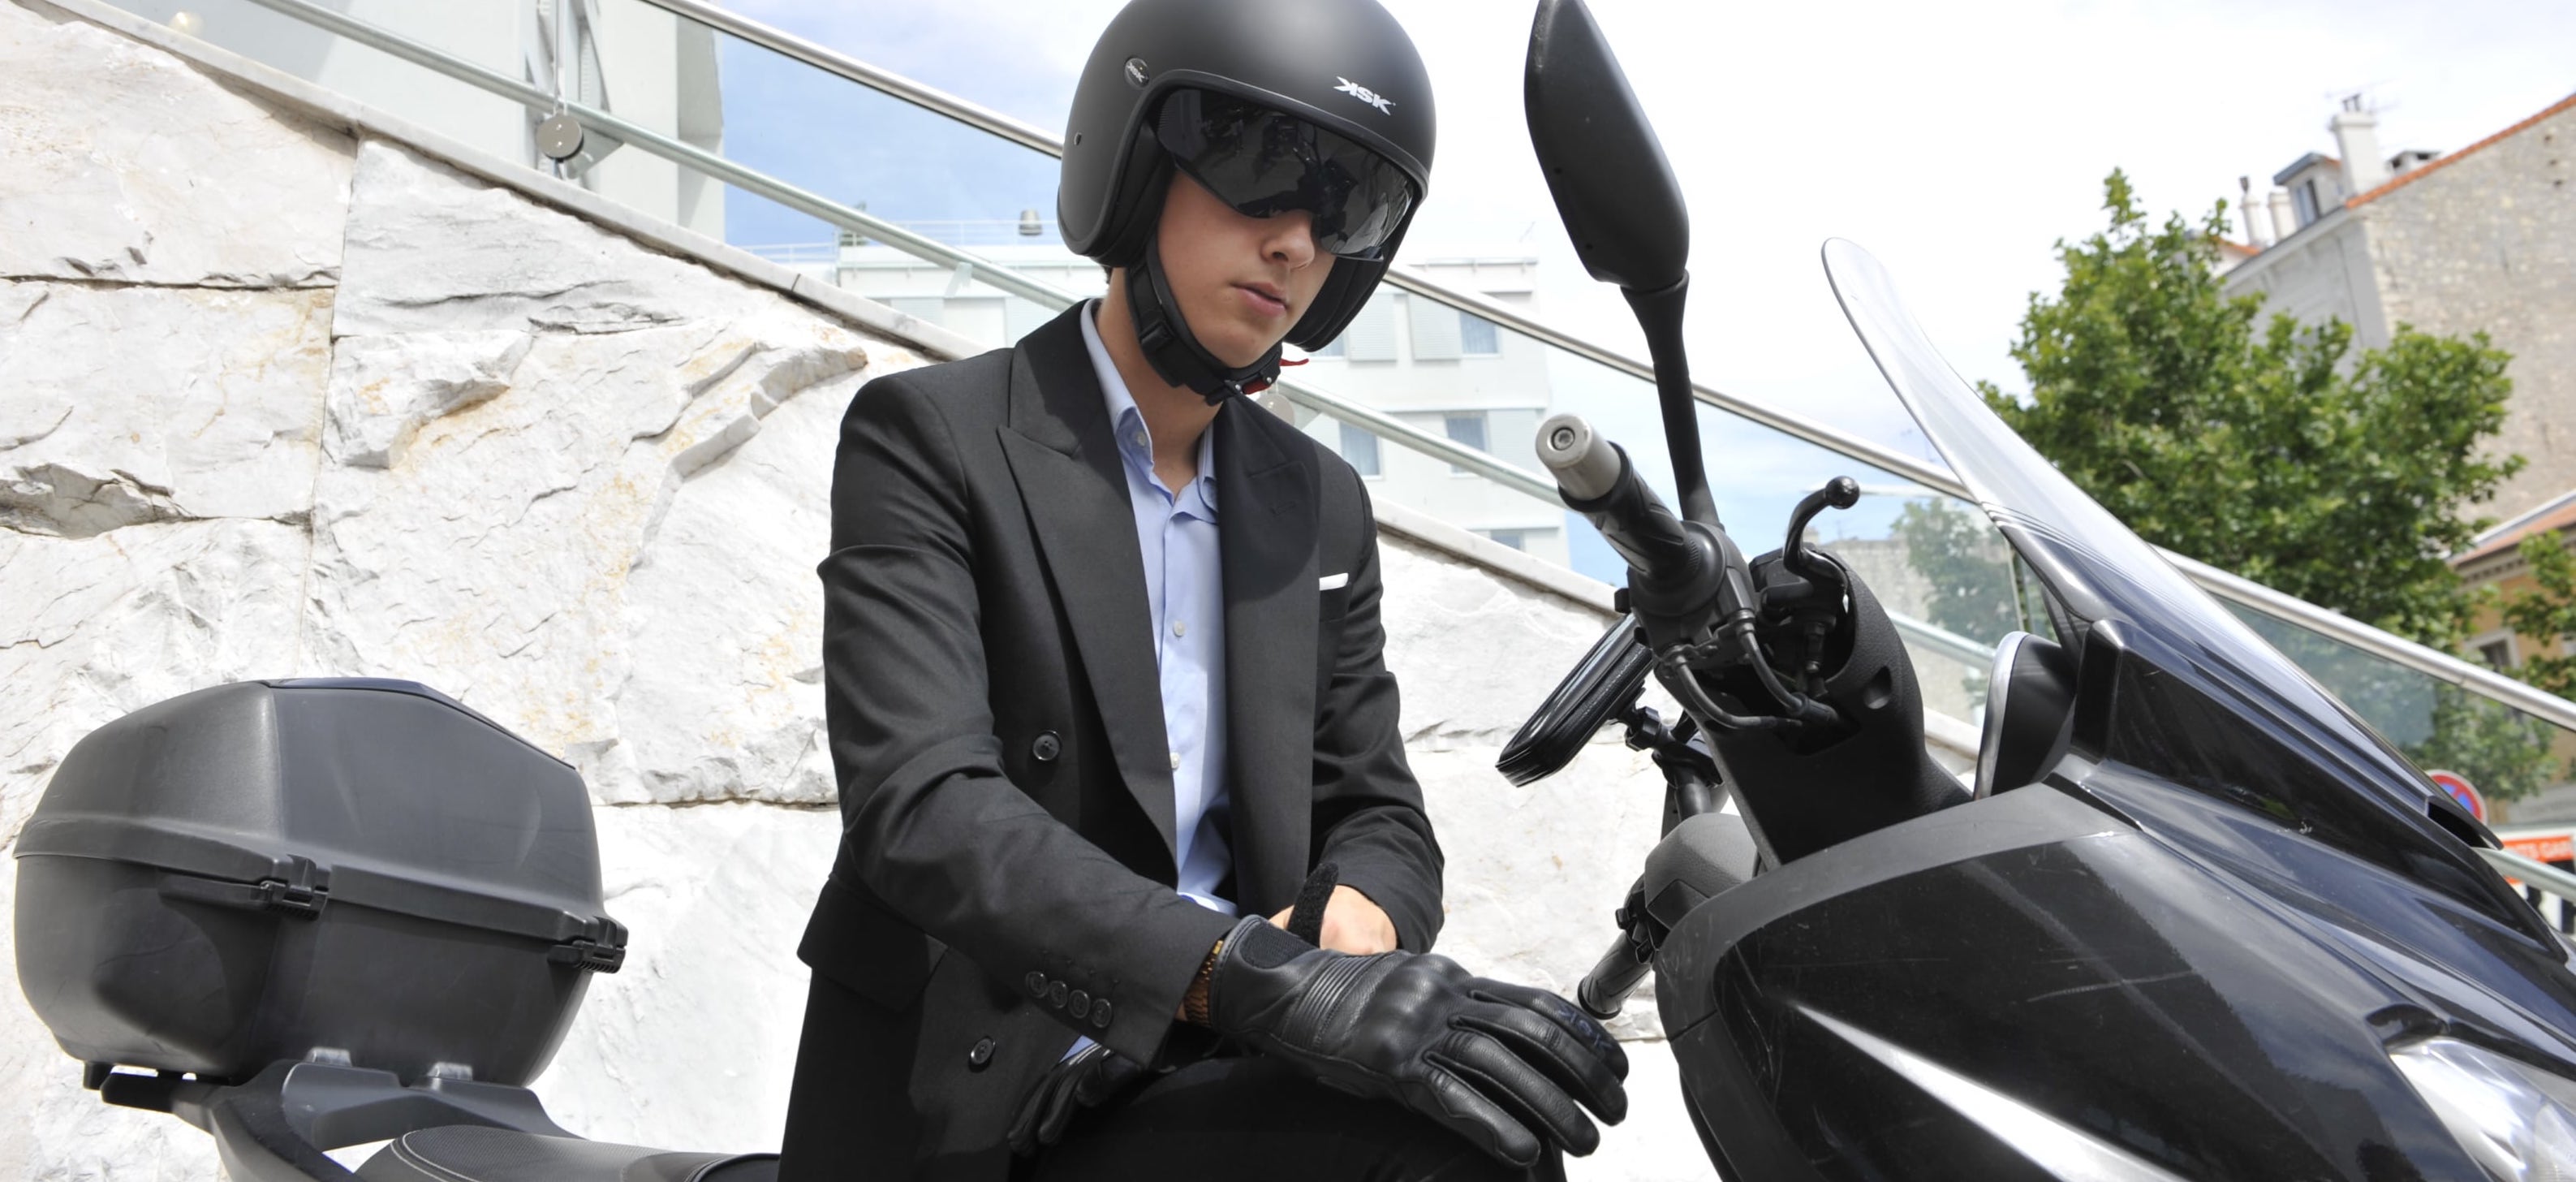 Comment choisir son antivol pour scooter / moto ? - #RoadbookScooteo